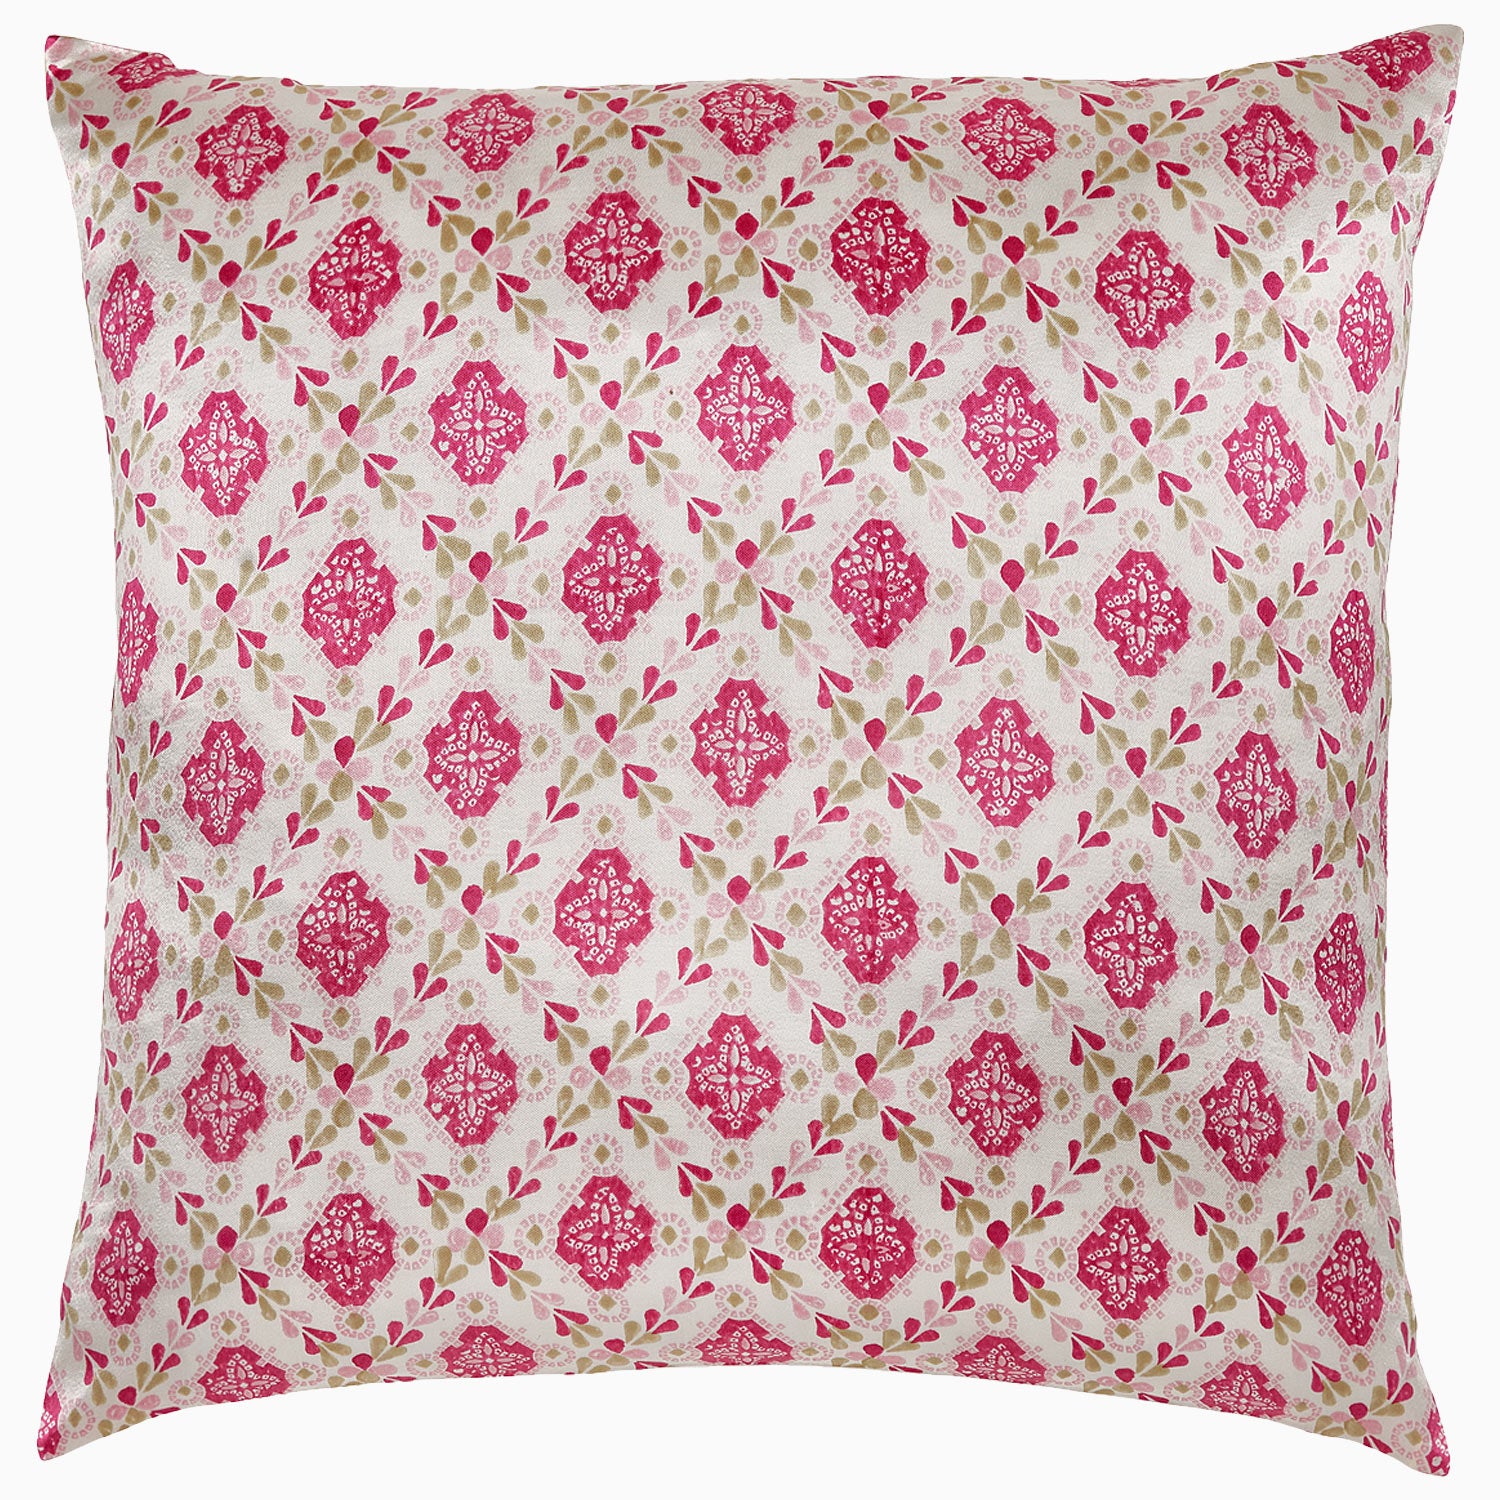 Dhruvi Berry Decorative Pillow Main